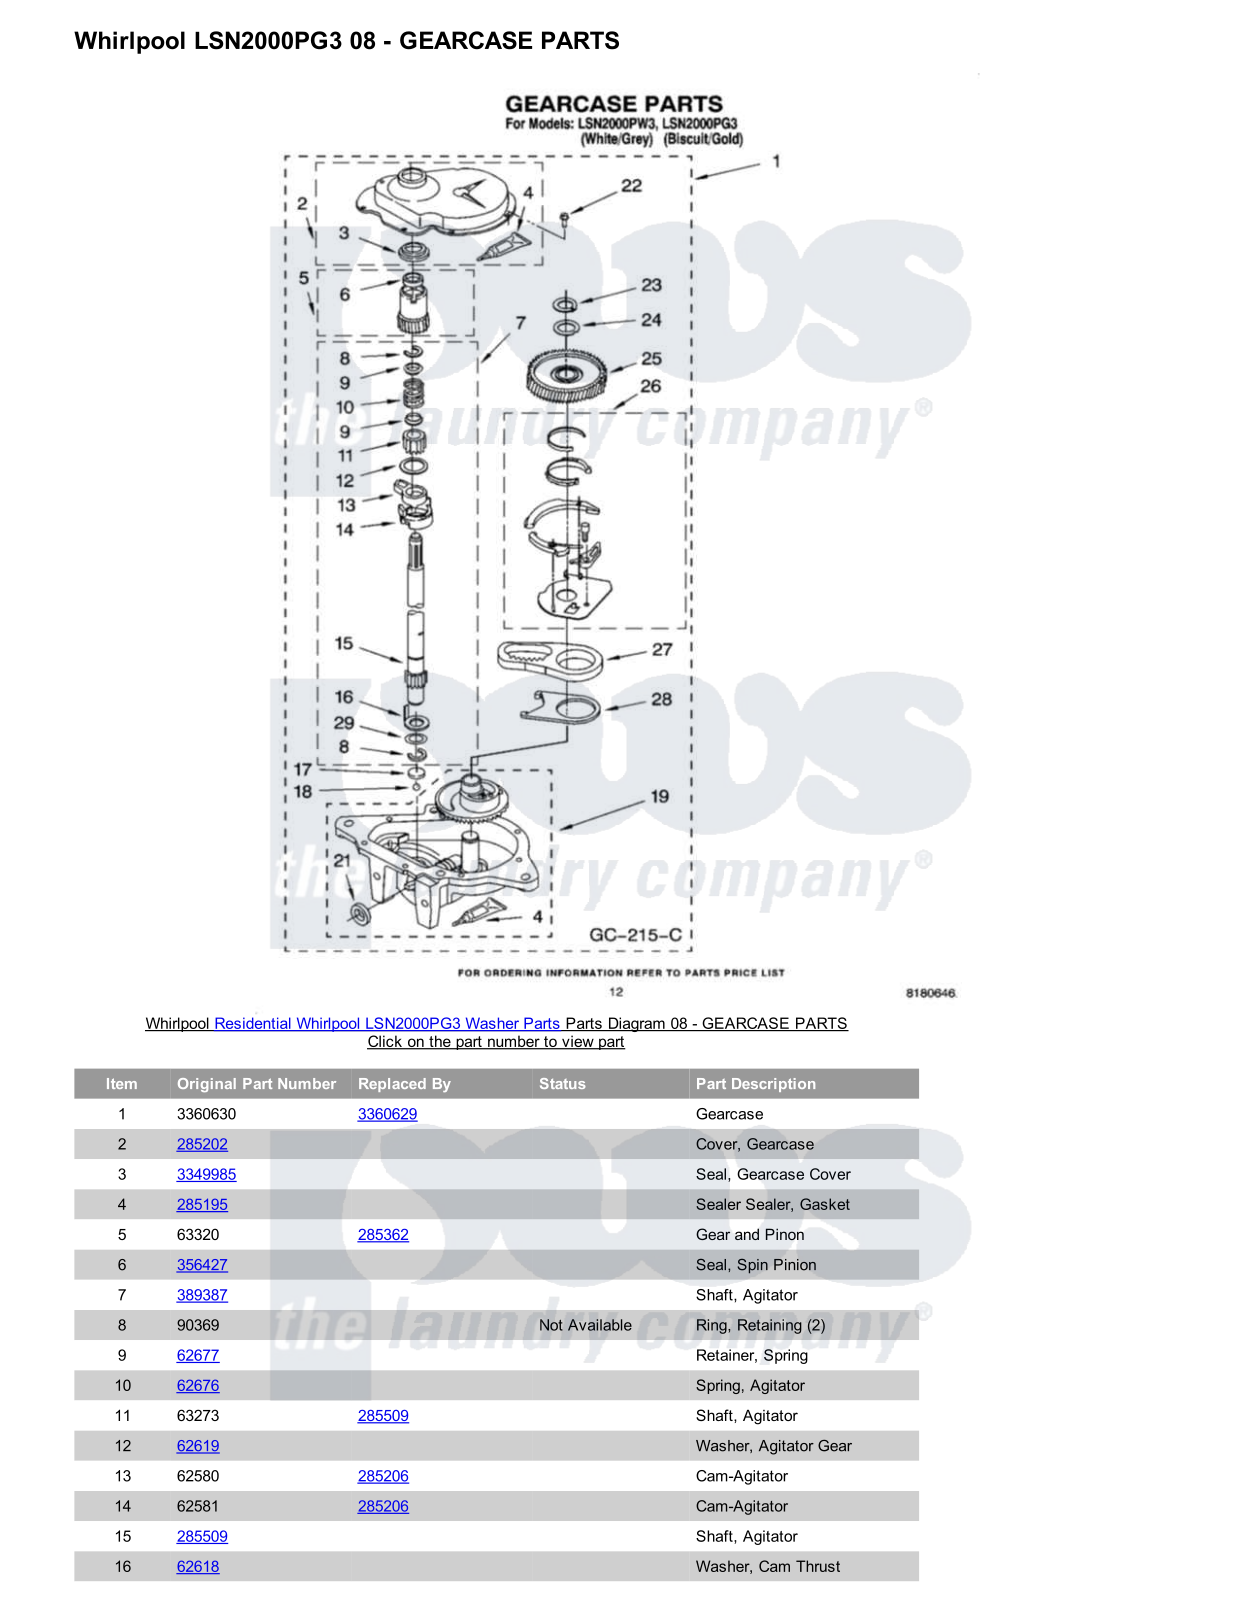 Whirlpool LSN2000PG3 Parts Diagram